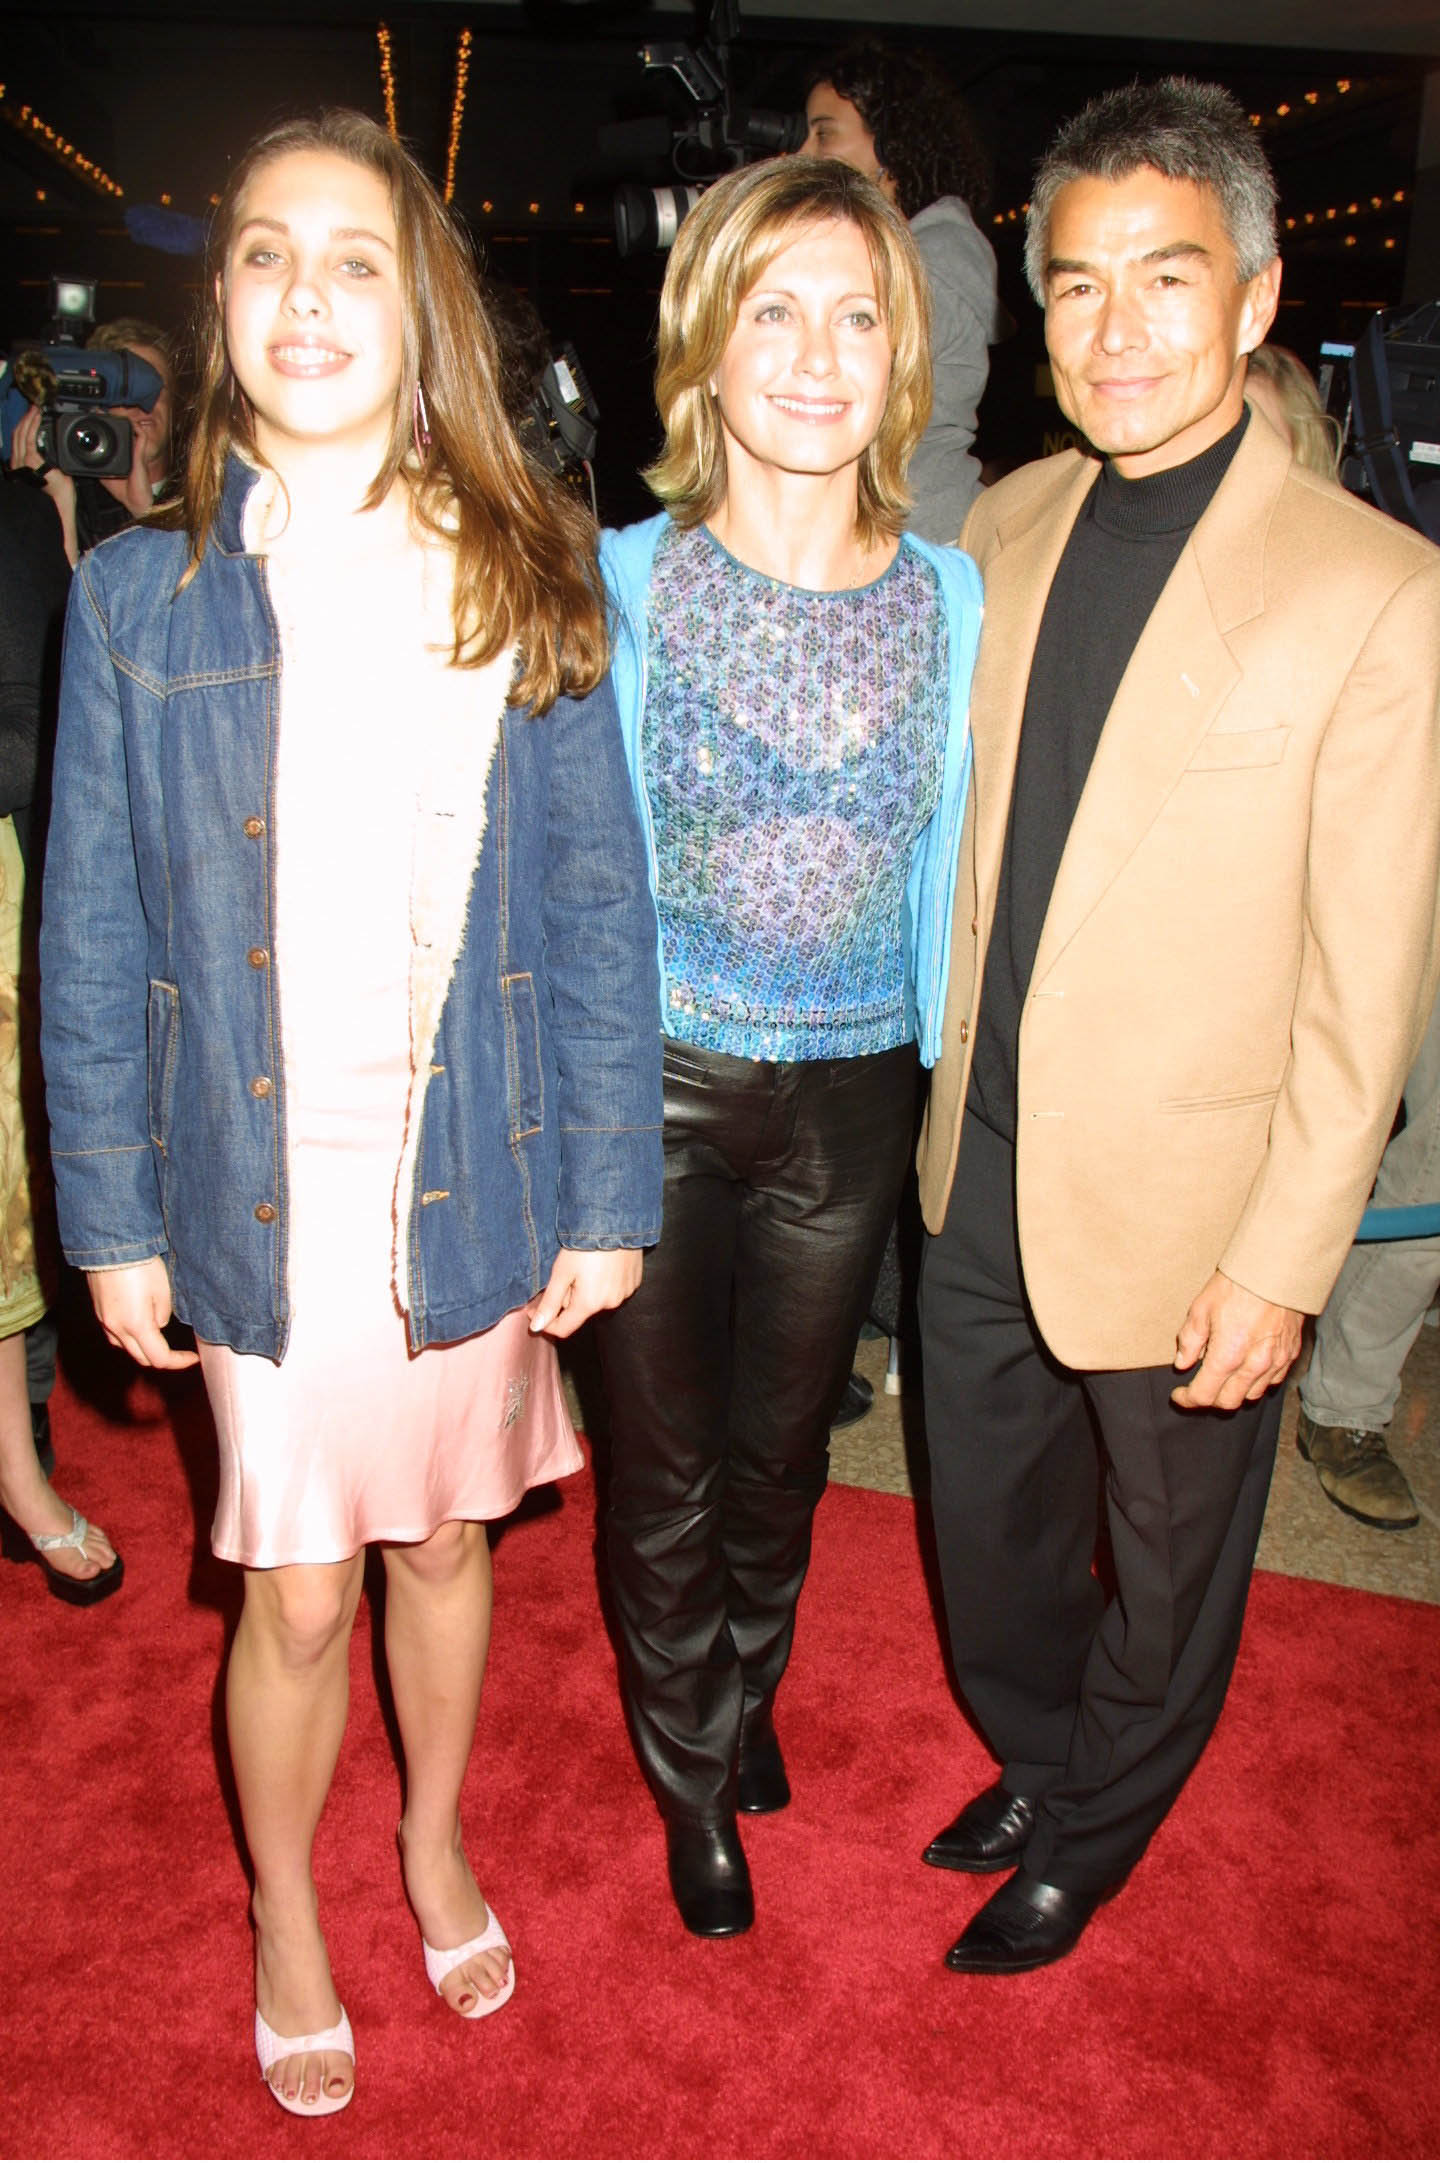 Chloe Lattanzi, Olivia Newton-John, and Patrick Kim McDermott at the "Mamma Mia!" New York opening night on February 26, 2001. | Source: Getty Images